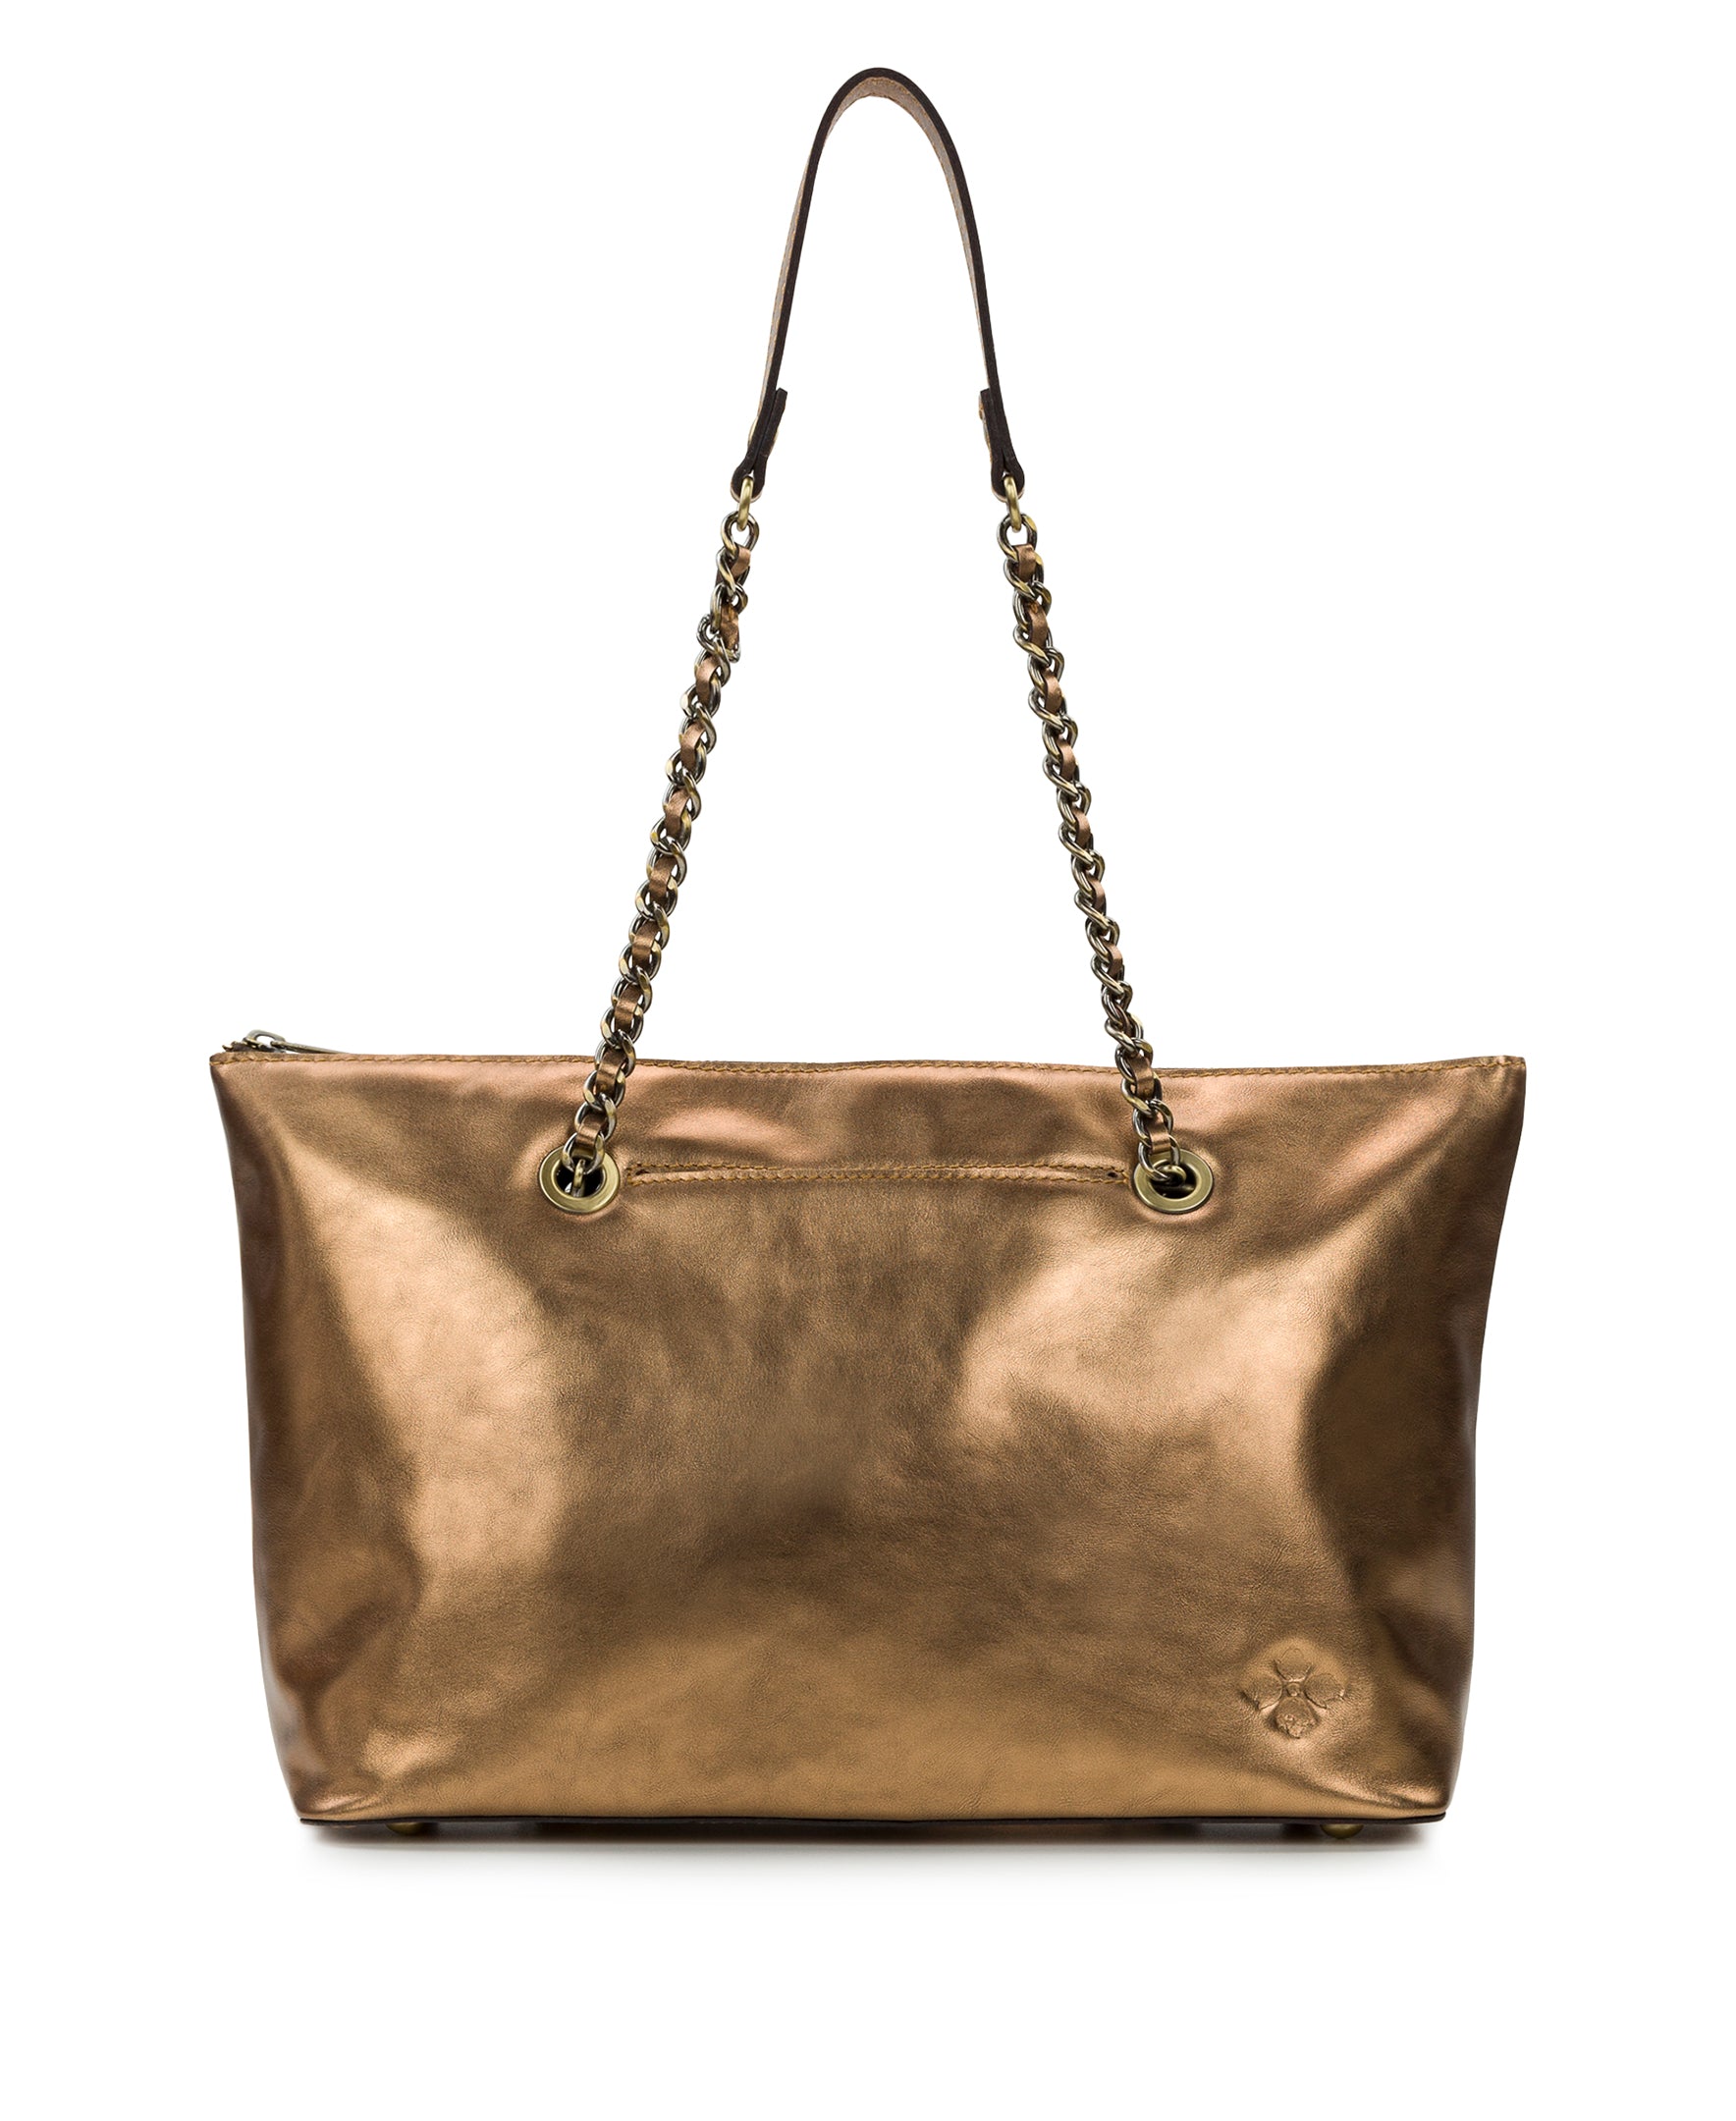 Metallic Bronze Leather Phone Bag